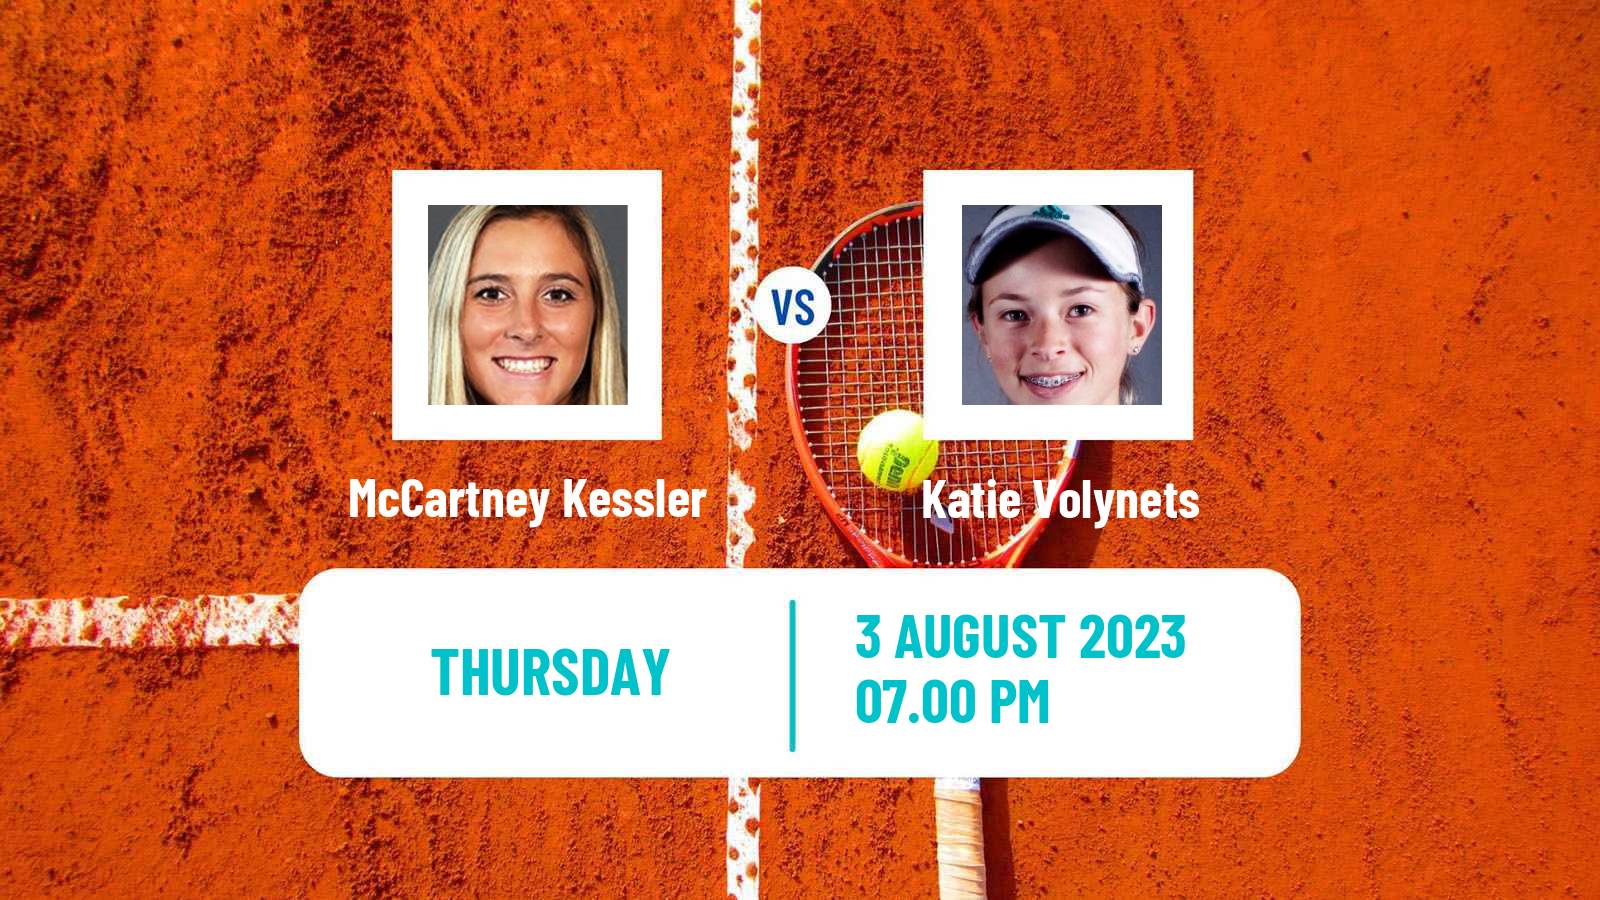 Tennis ITF W60 Lexington Ky Women McCartney Kessler - Katie Volynets